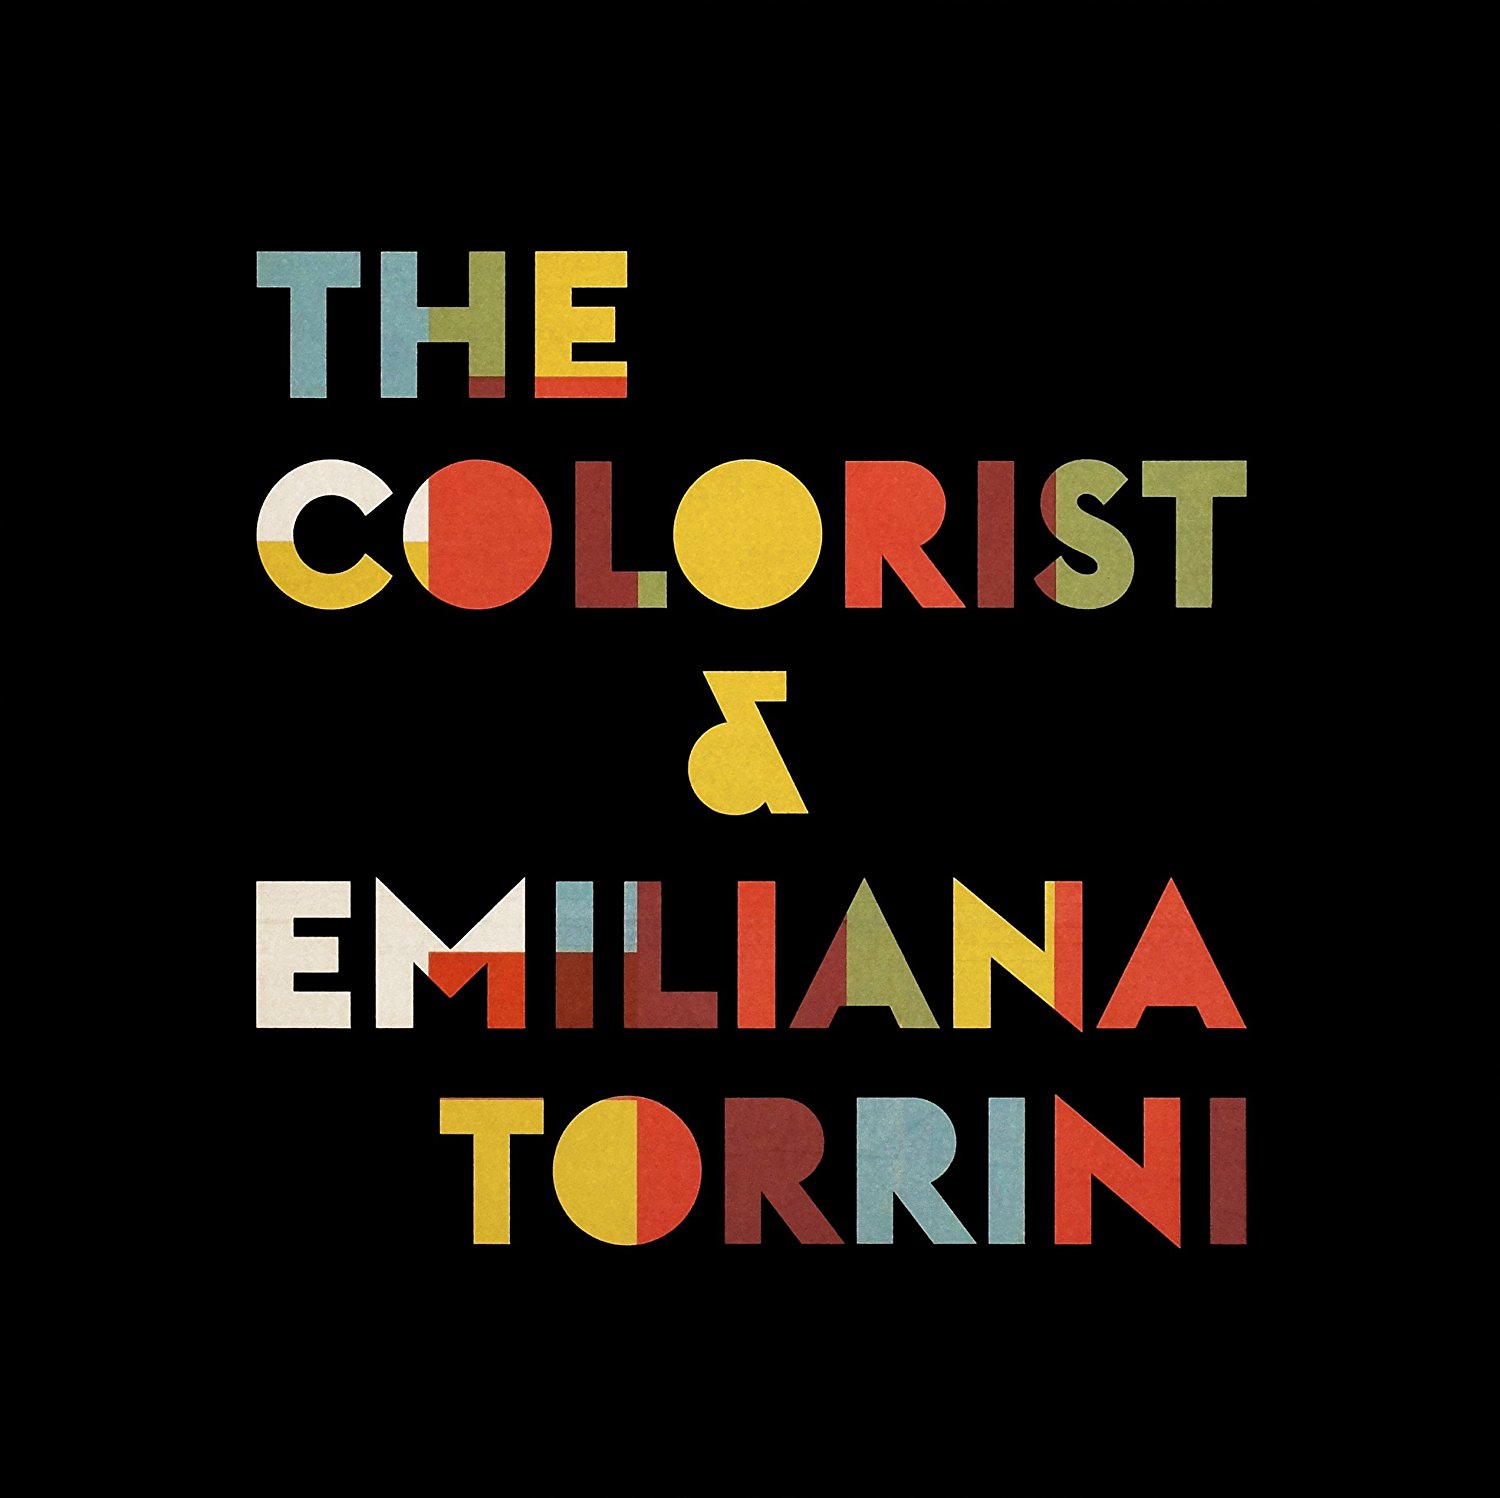 emiliana torrini the colorist